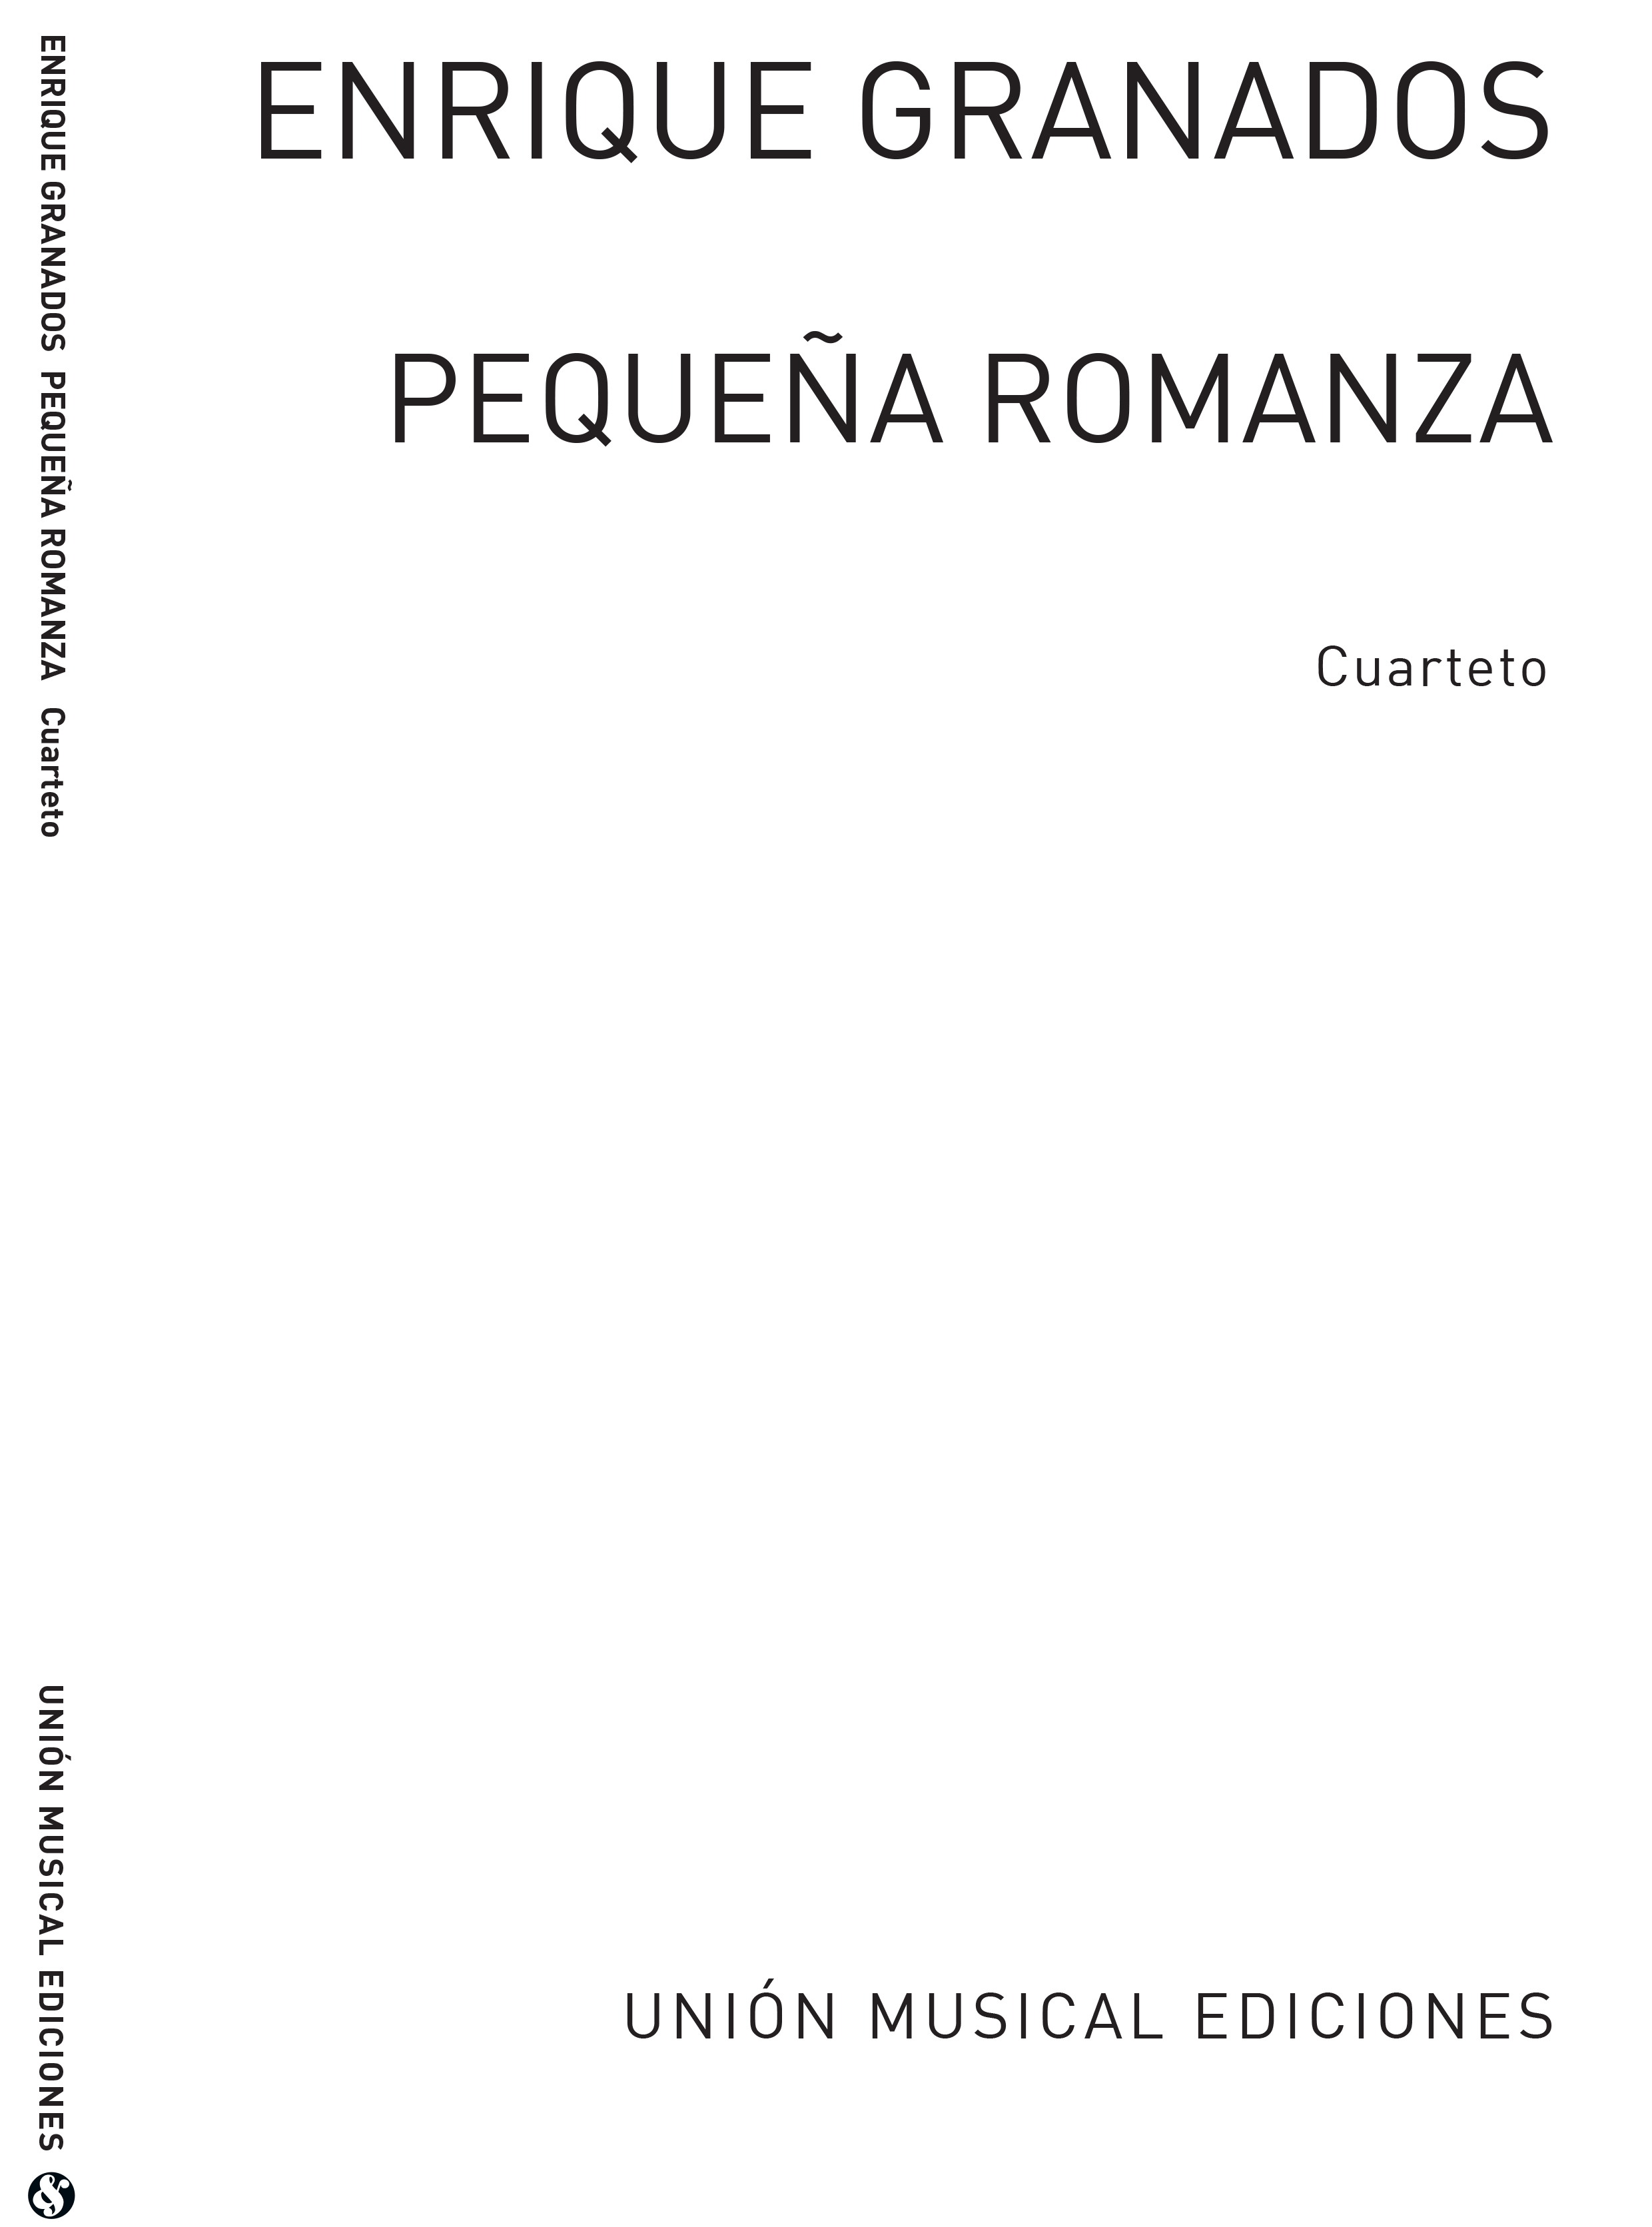 Granados: Pequena Romanza for String Quartet